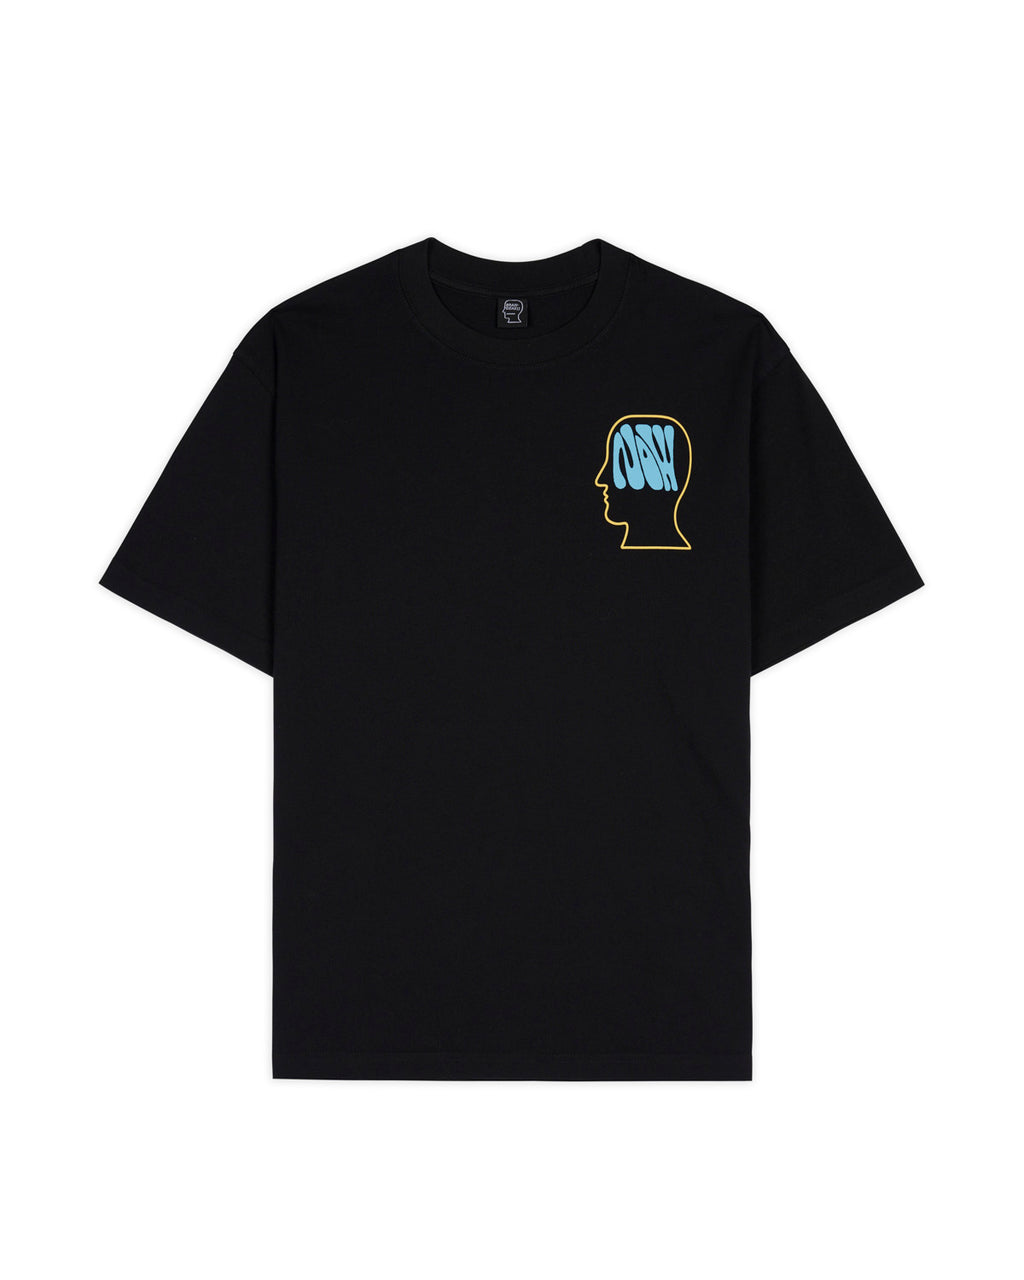 The Now Movement T-shirt - Black